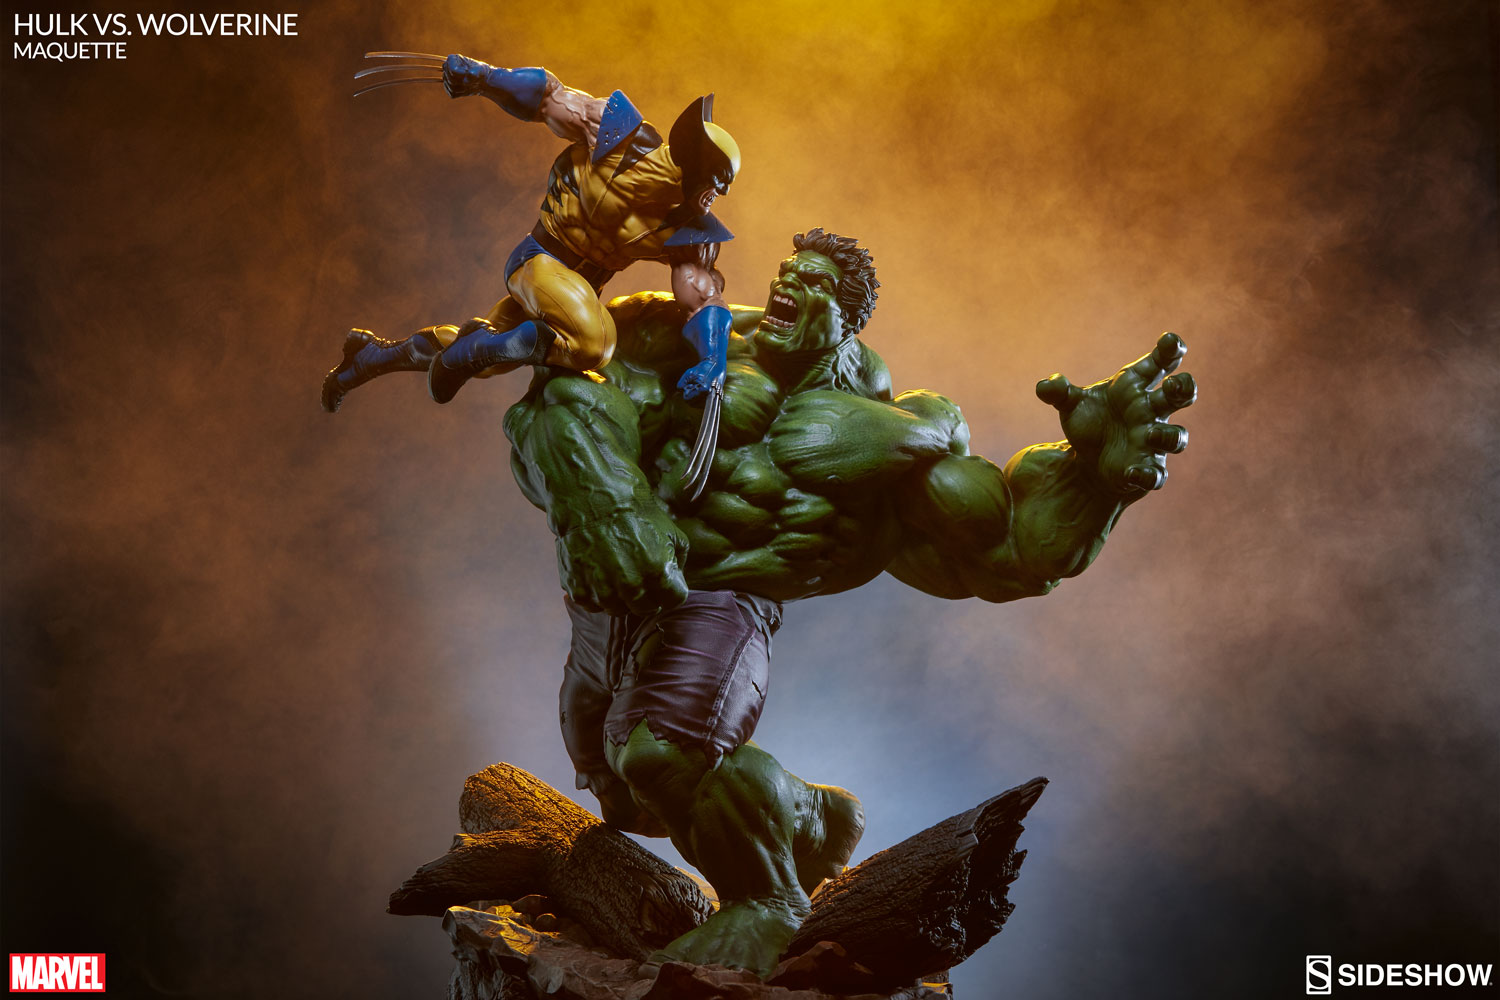 marvel-hulk-vs-wolverine-maquette-200216-02.jpg